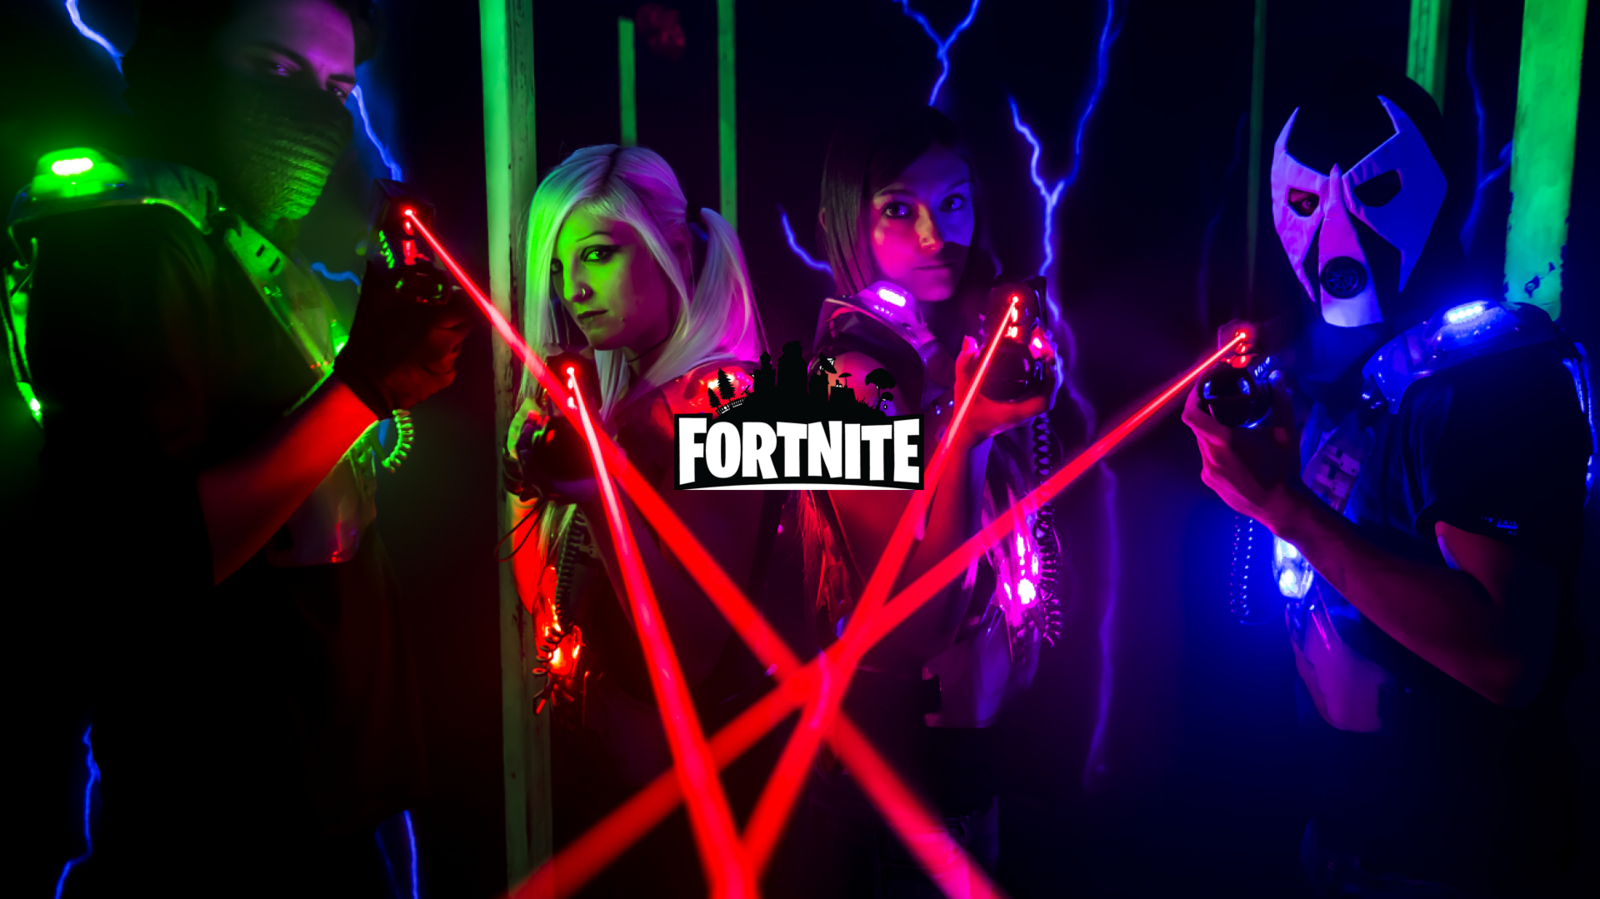 Fortnite lasergame party